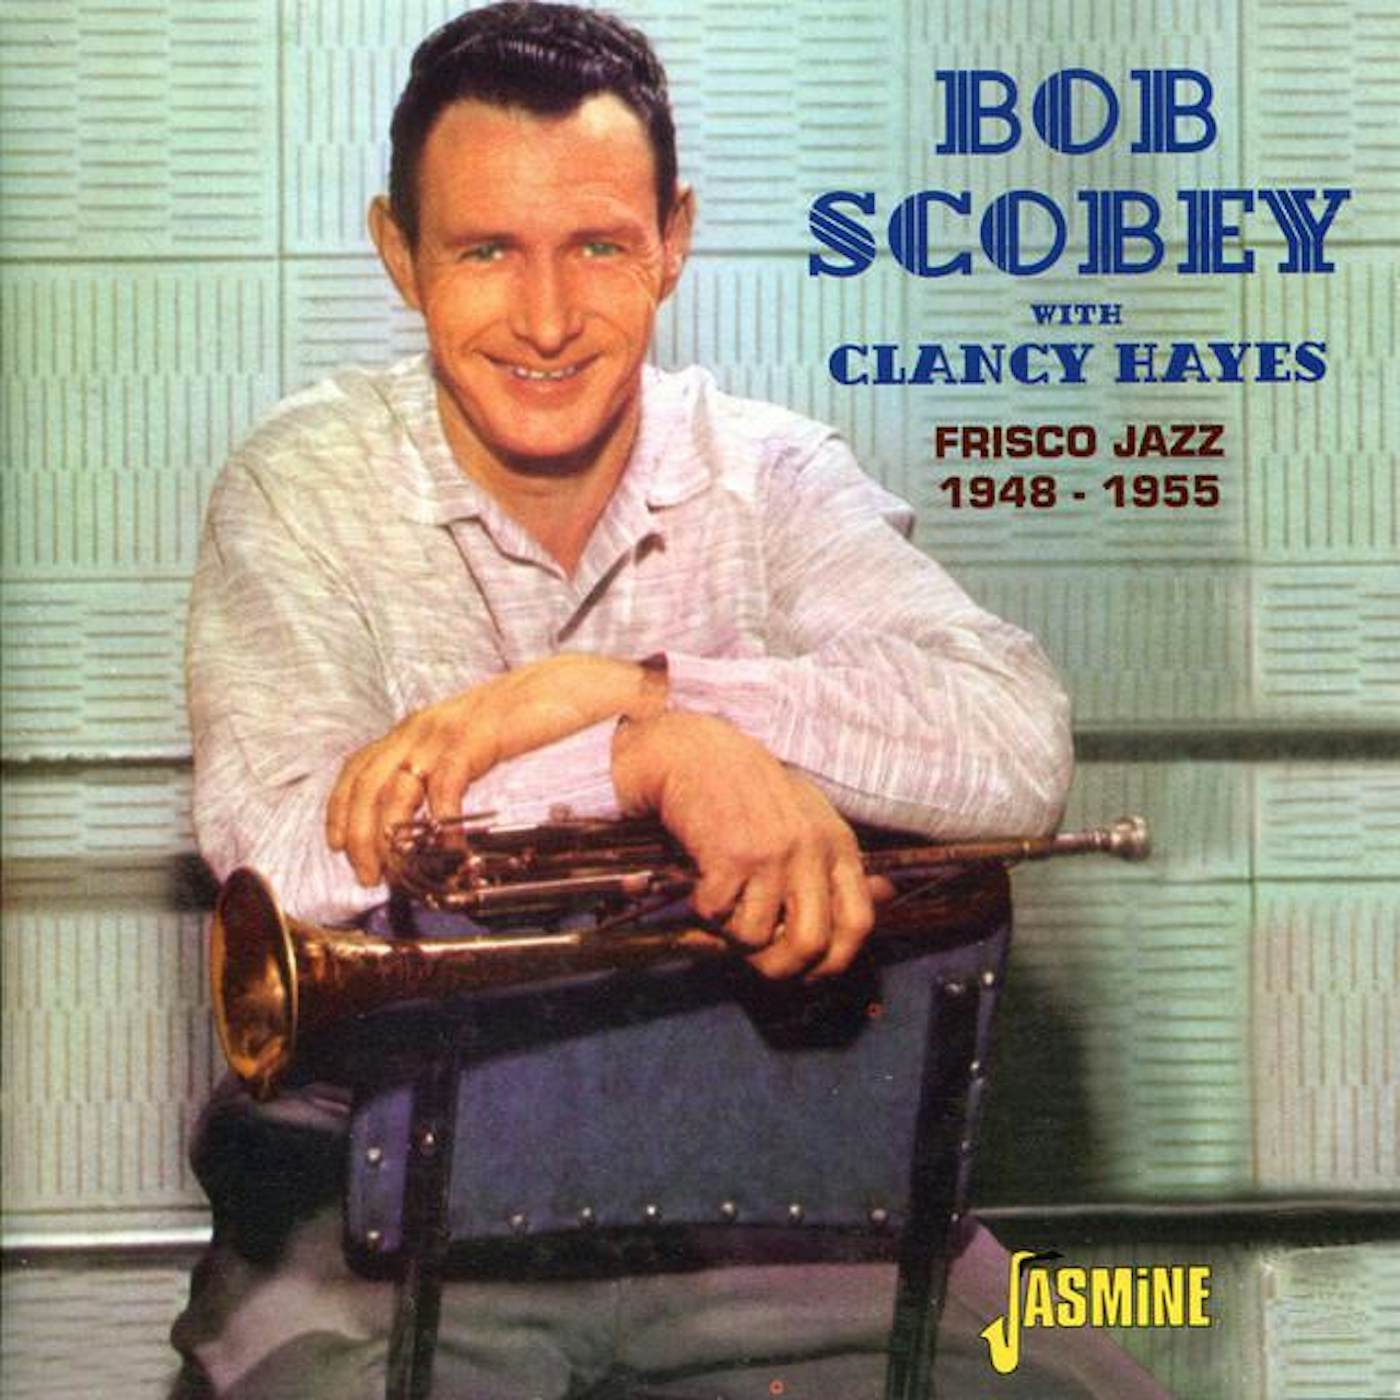 Bob Scobey